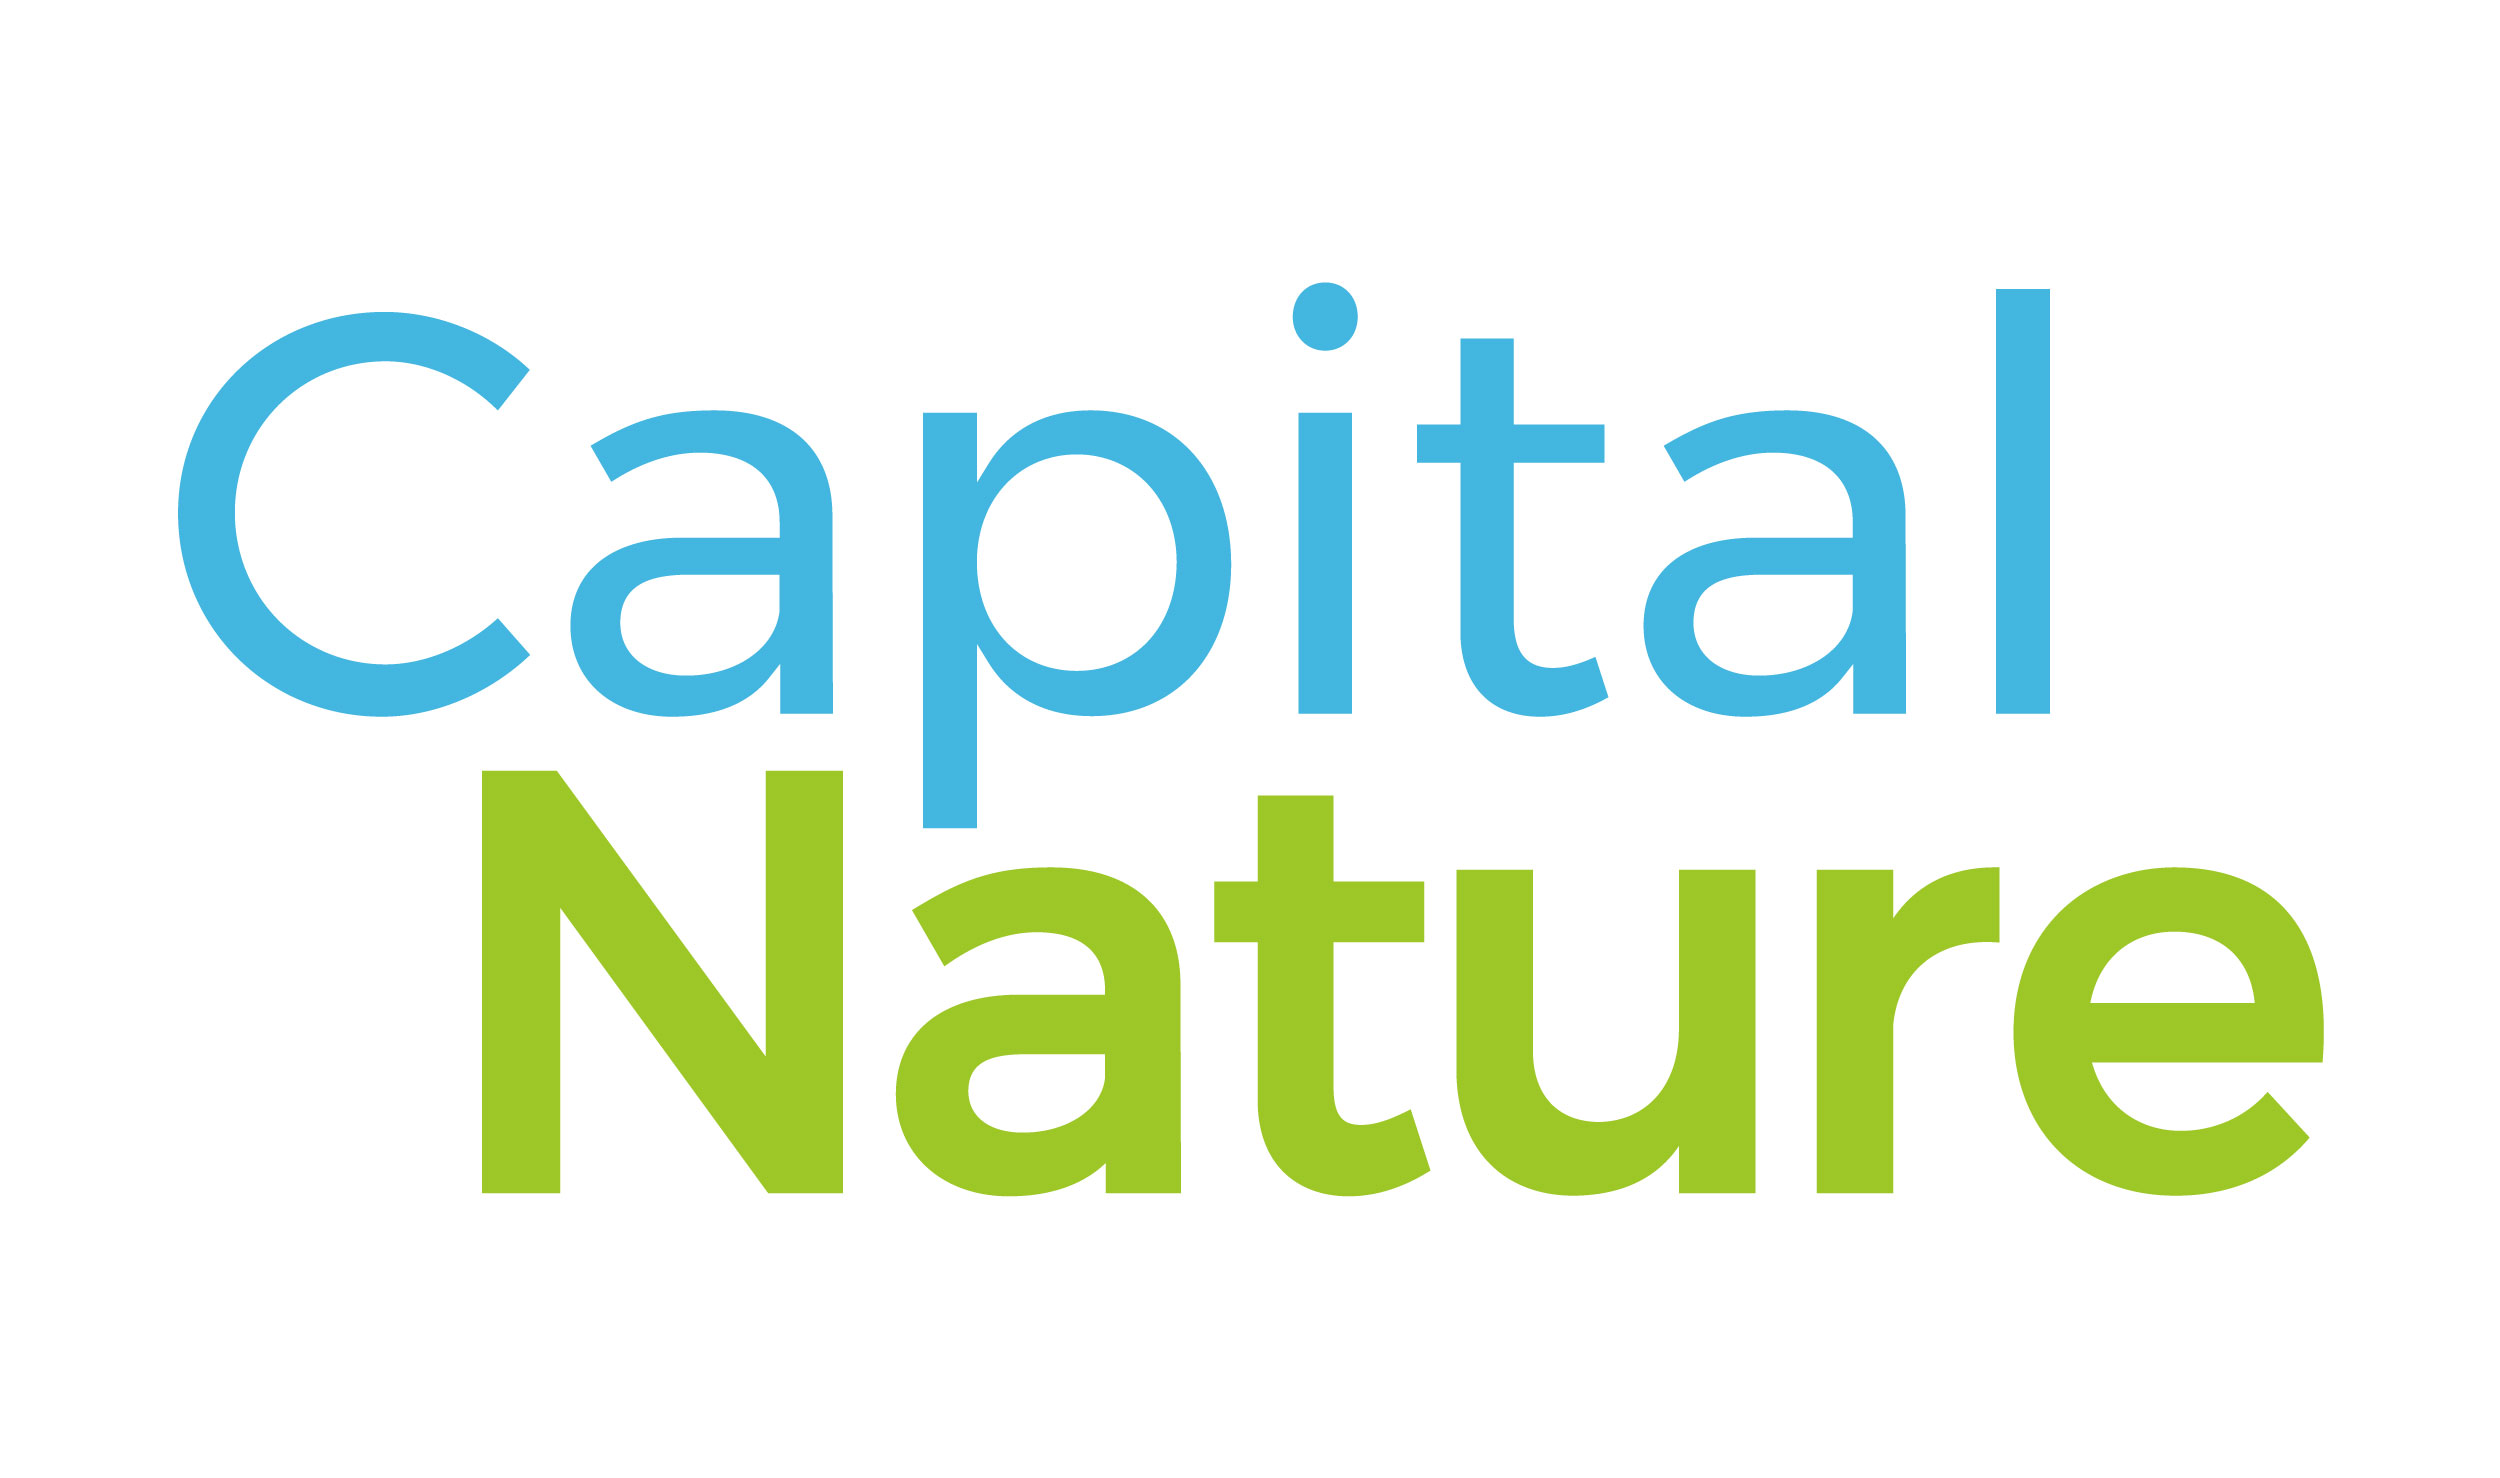 Capital Nature